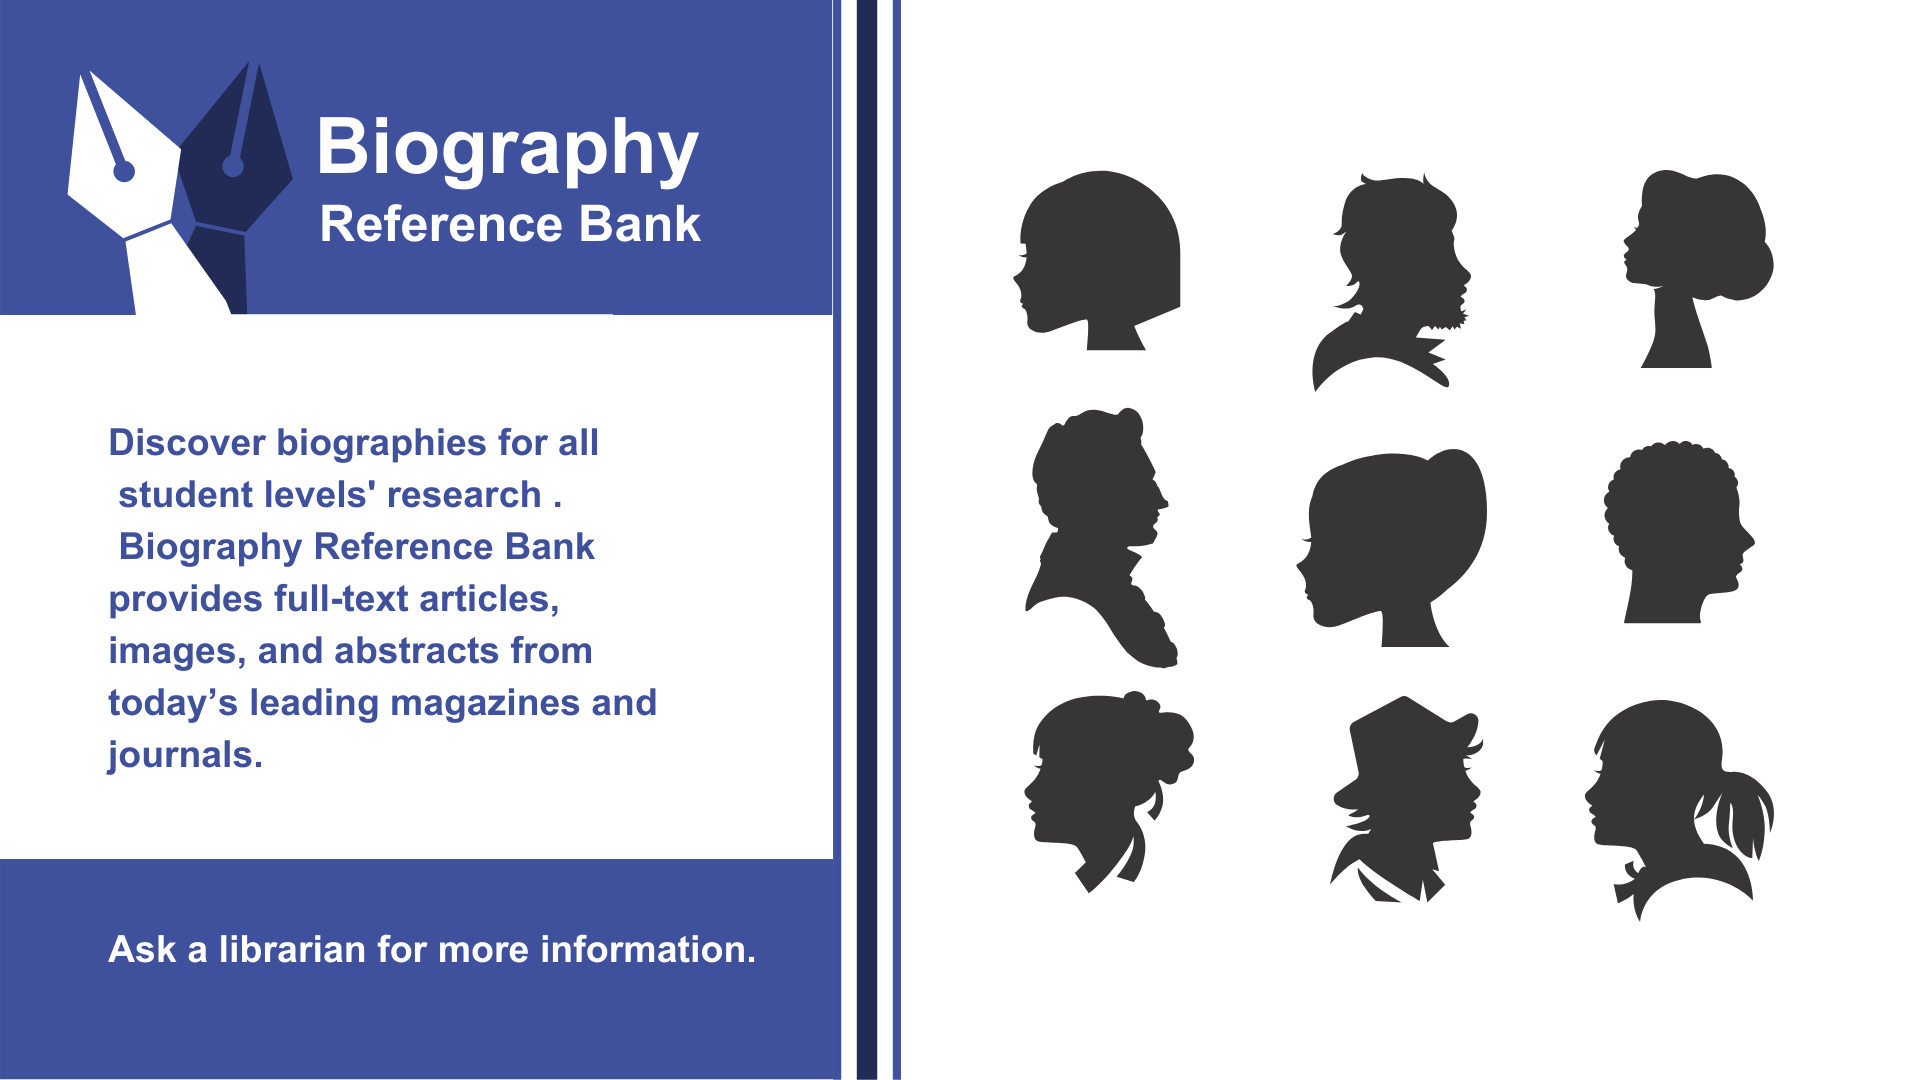 Image promoting Biography Reference Bank for digital signage